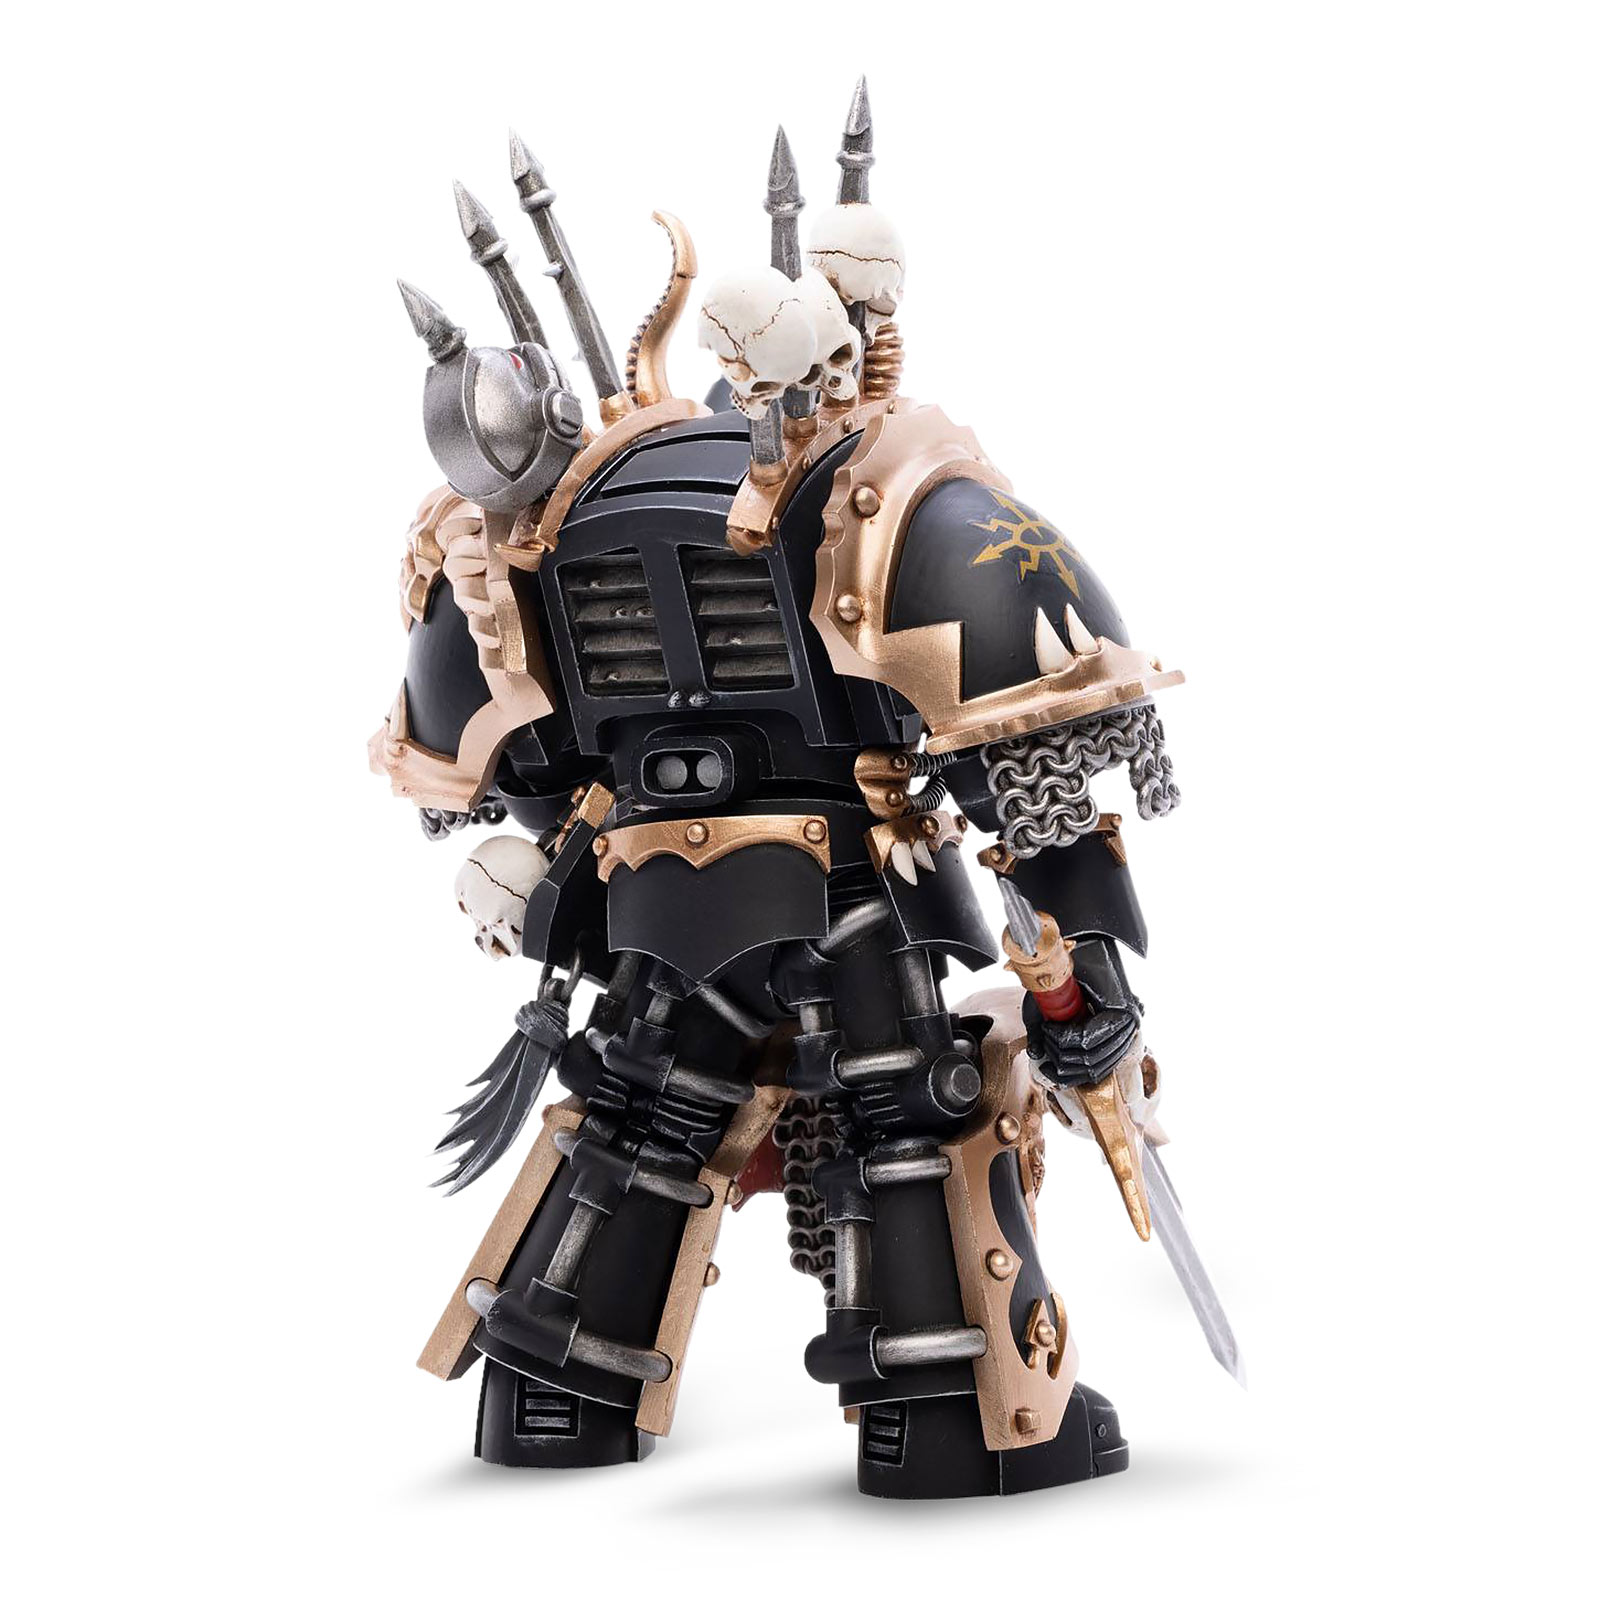 Warhammer 40k - Black Legion Brother Gnarl Actionfigur